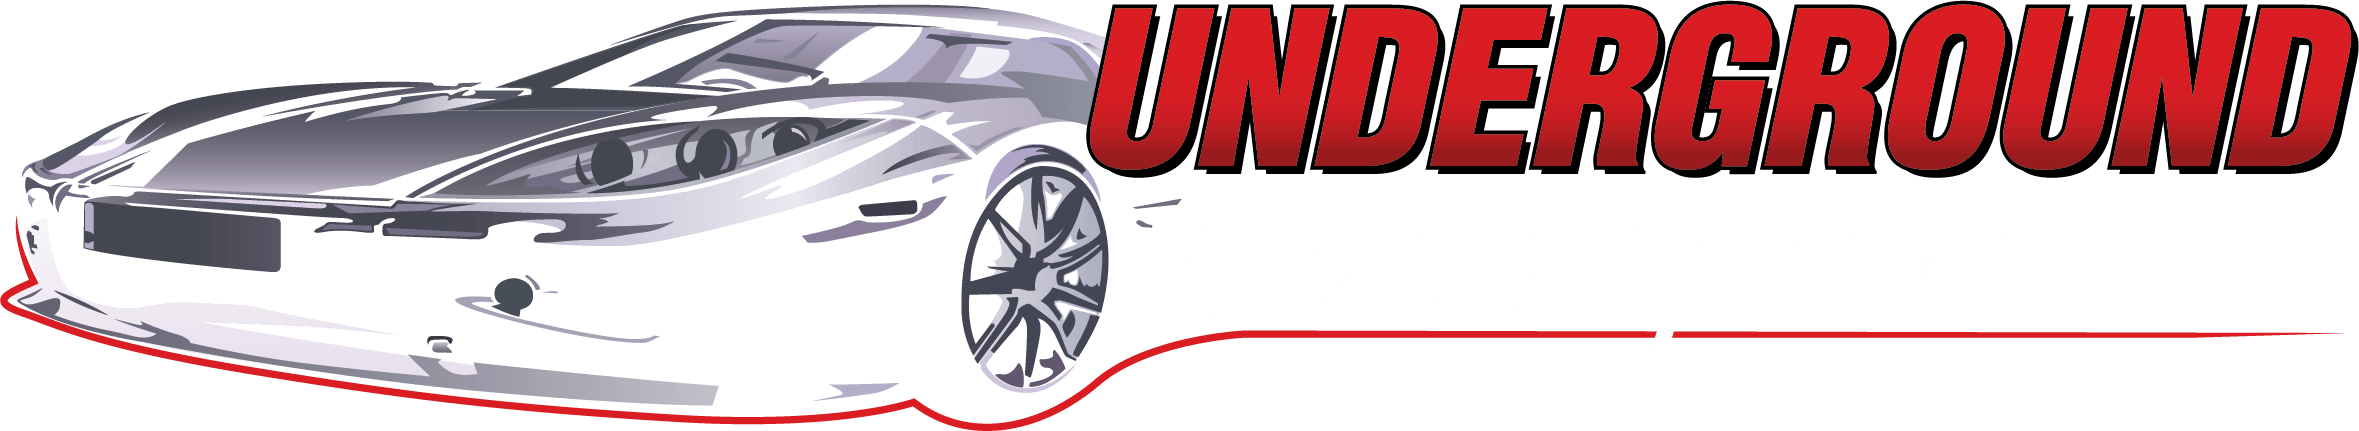 Performance Automotive Shop Logo - Underground Autosports. 's Premier Automotive Performance Shop